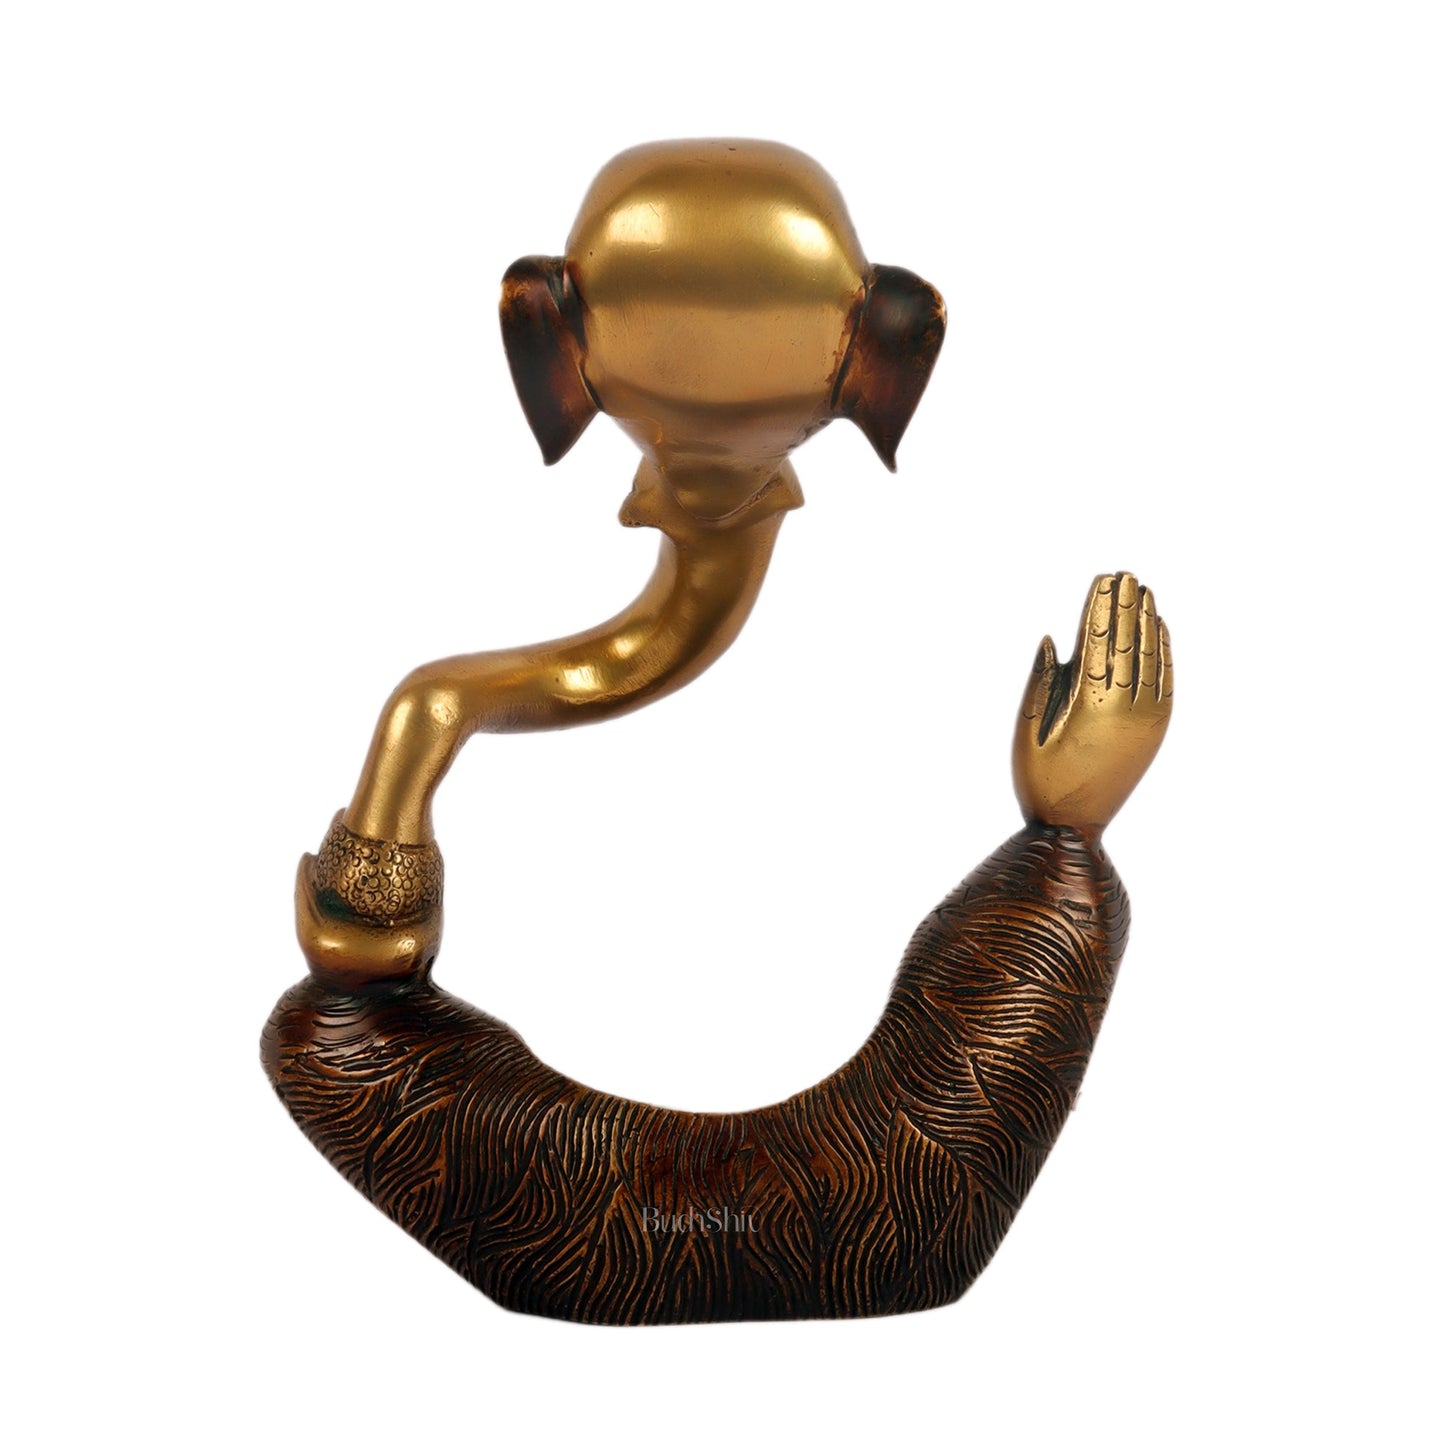 brass Ganesha modern Abstract Antique Gold Finish| Medium 8.5 inches Tall| 2.6 kgs - Budhshiv.com